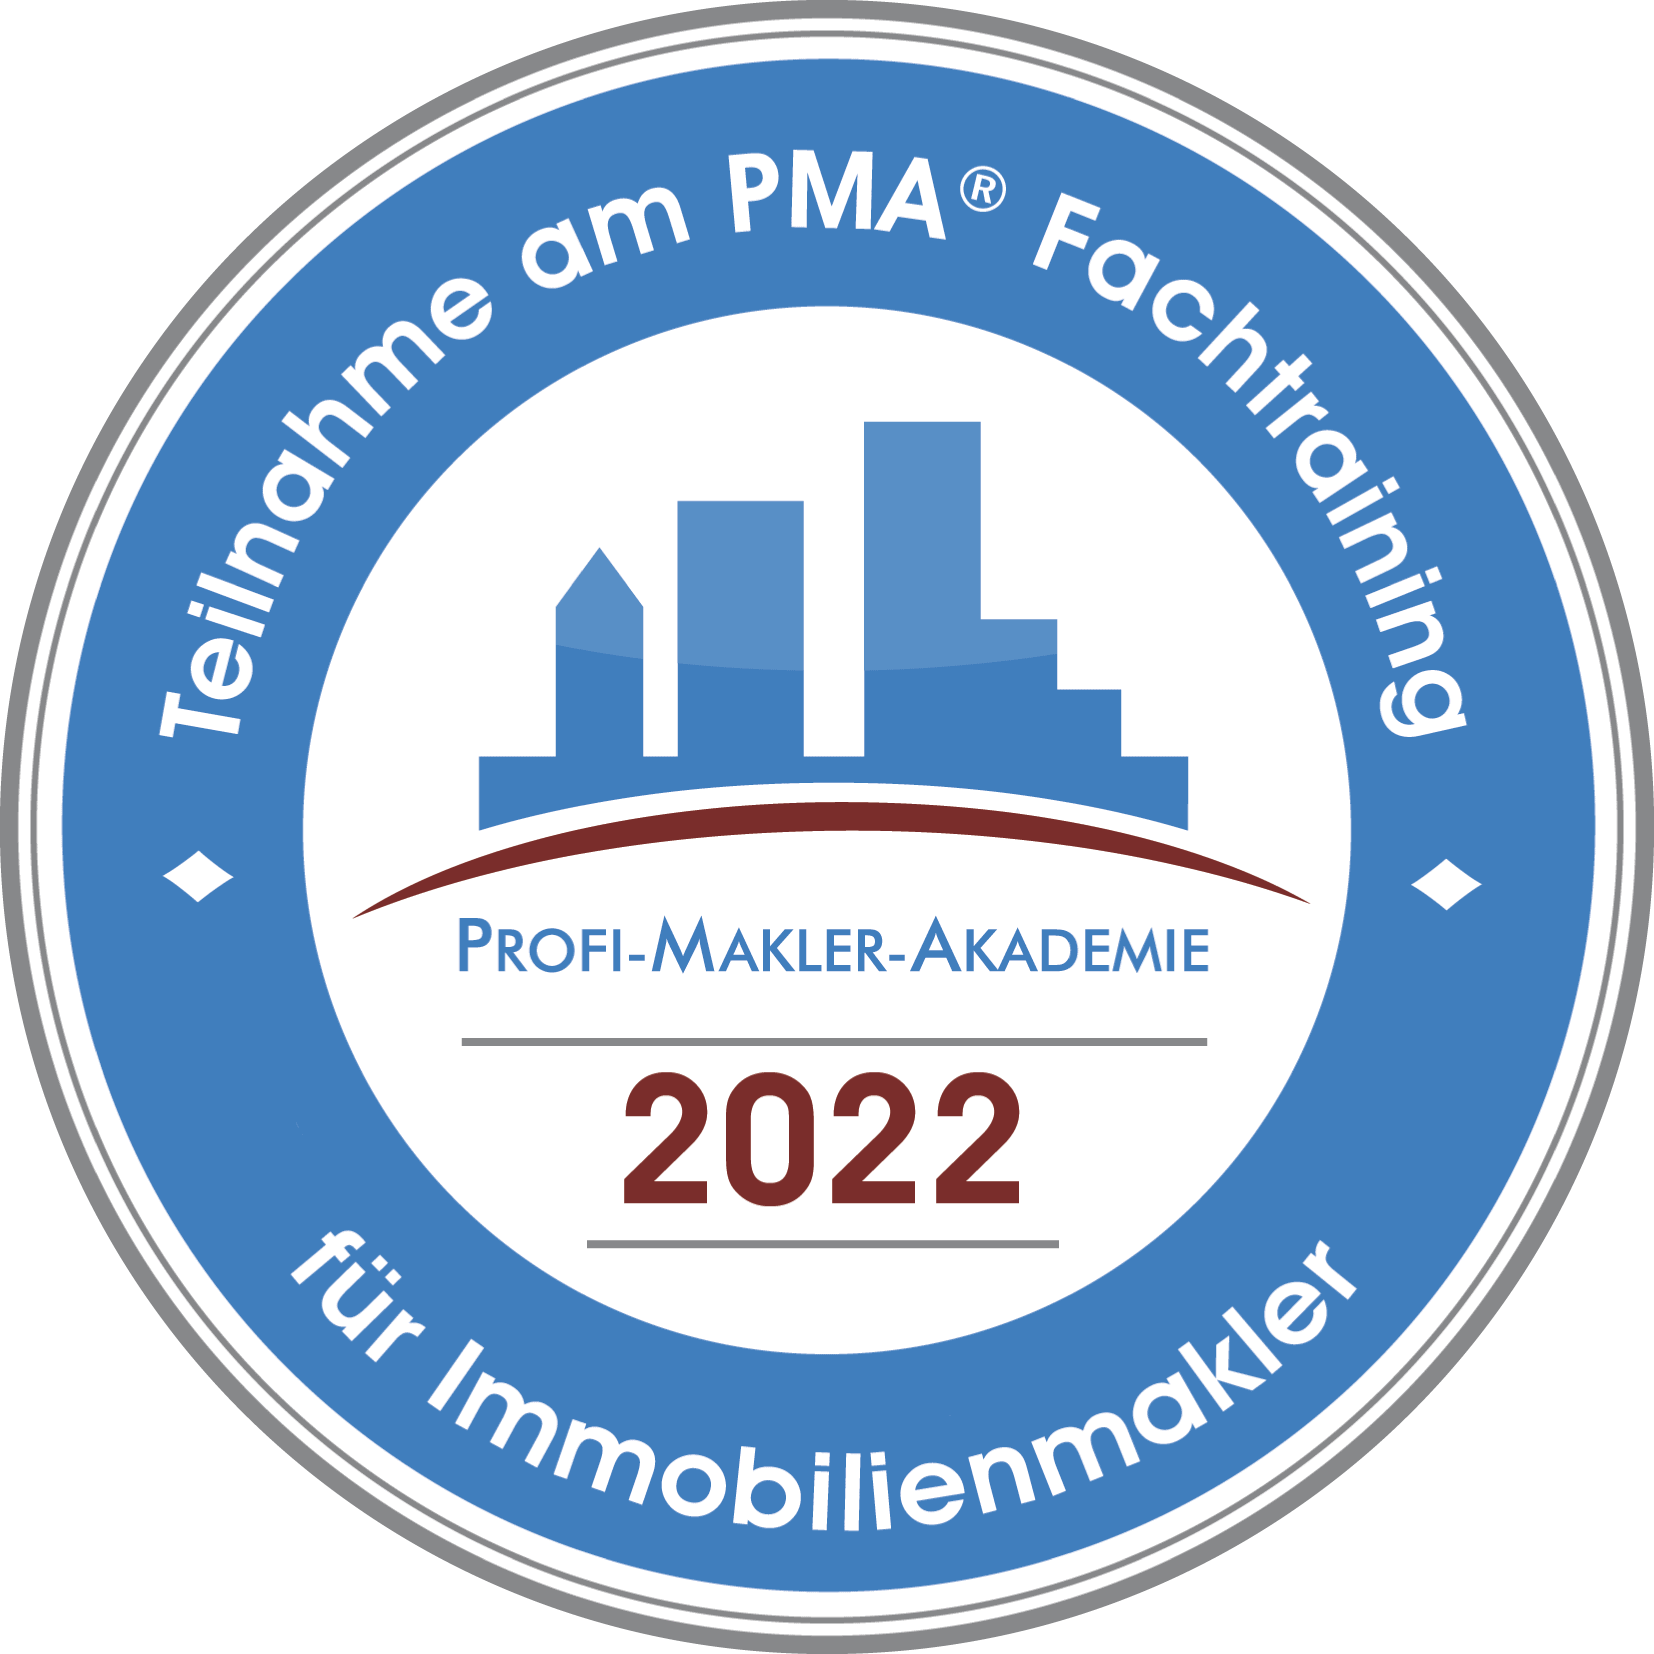 Emblem 2022 - PMA® Fachtraining für Immobilienmakler (gross transparent)